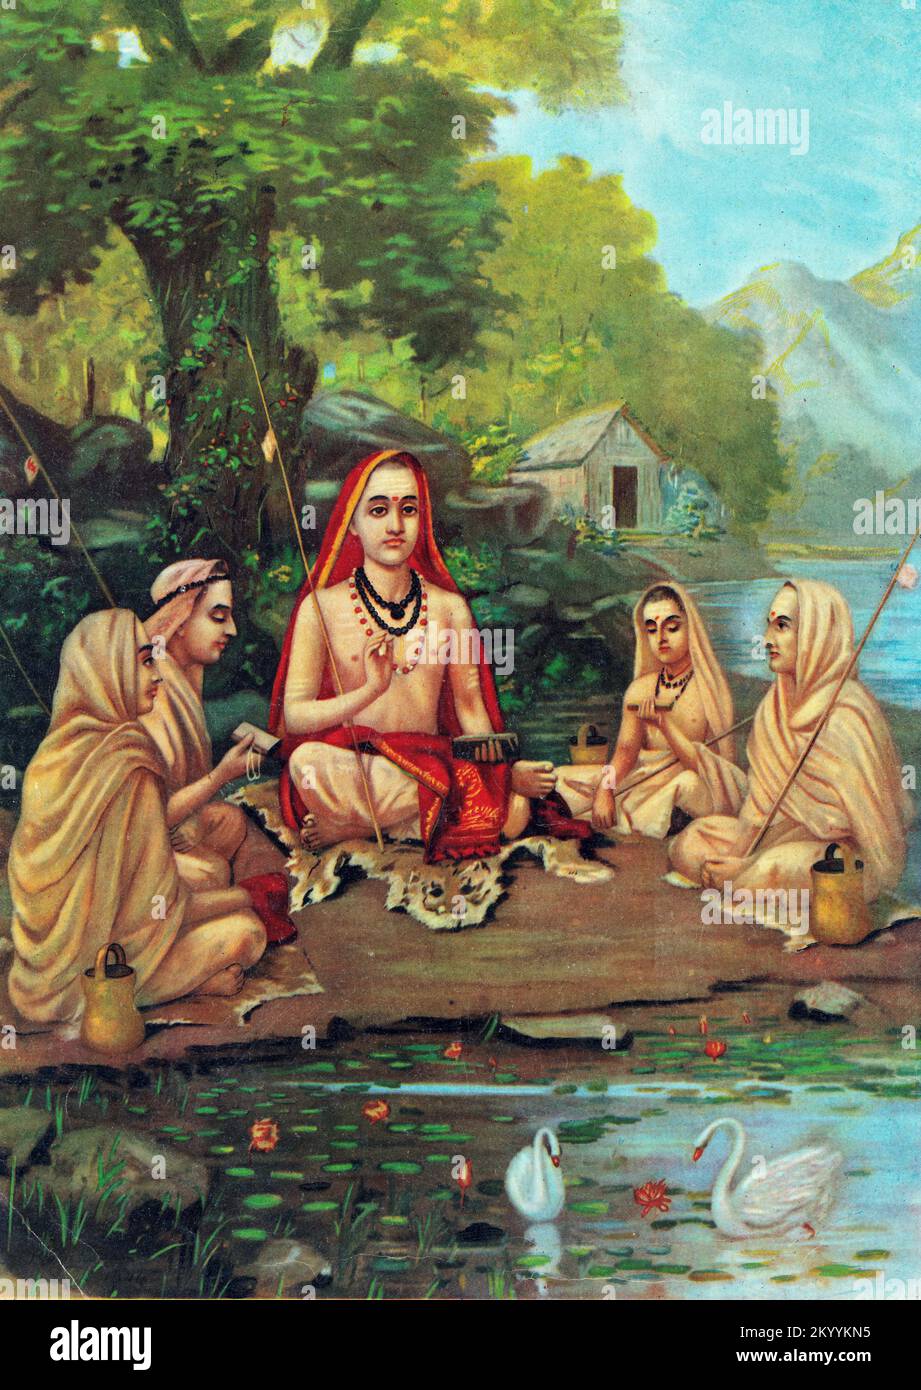 Adi Shankara (788-820 CE) or Adi Shankaracharya, founder of Advaita Vedanta, with disciples, by Raja Ravi Varma (1904) Stock Photo